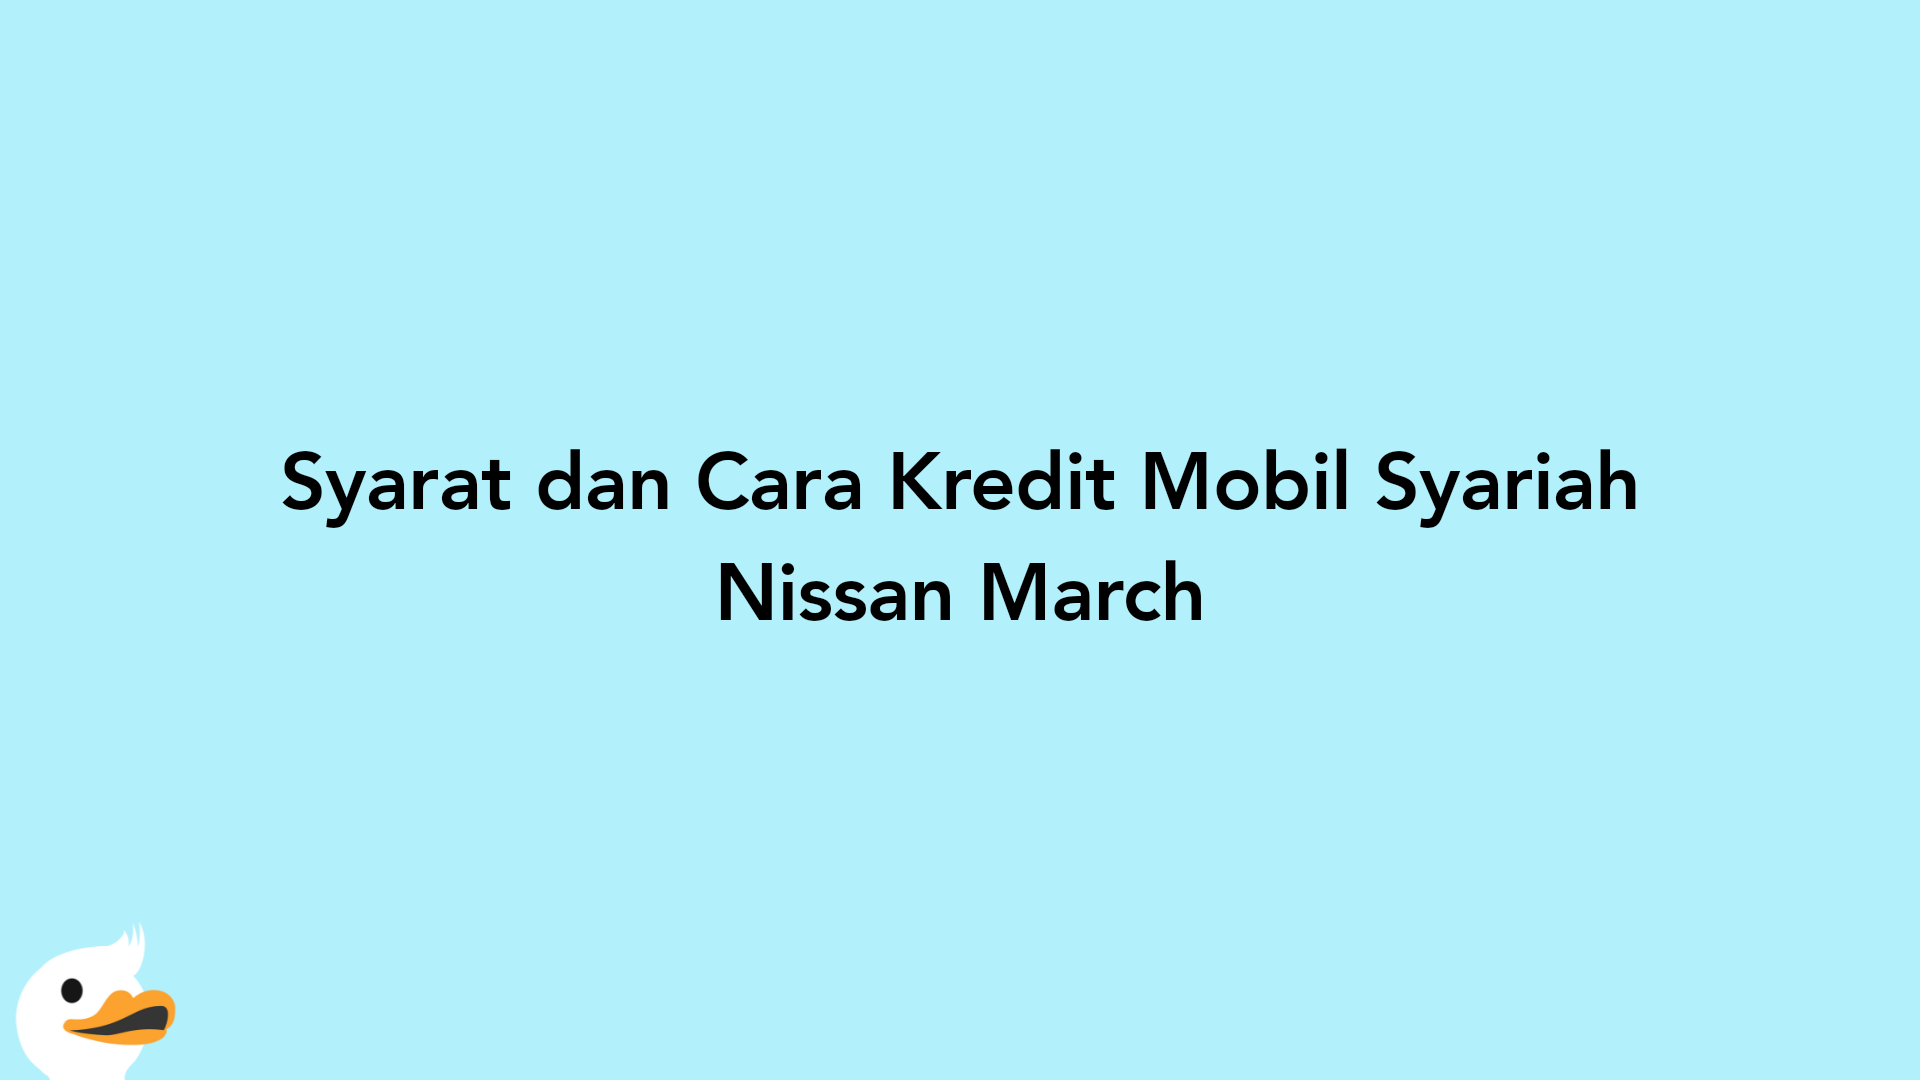 Syarat dan Cara Kredit Mobil Syariah Nissan March